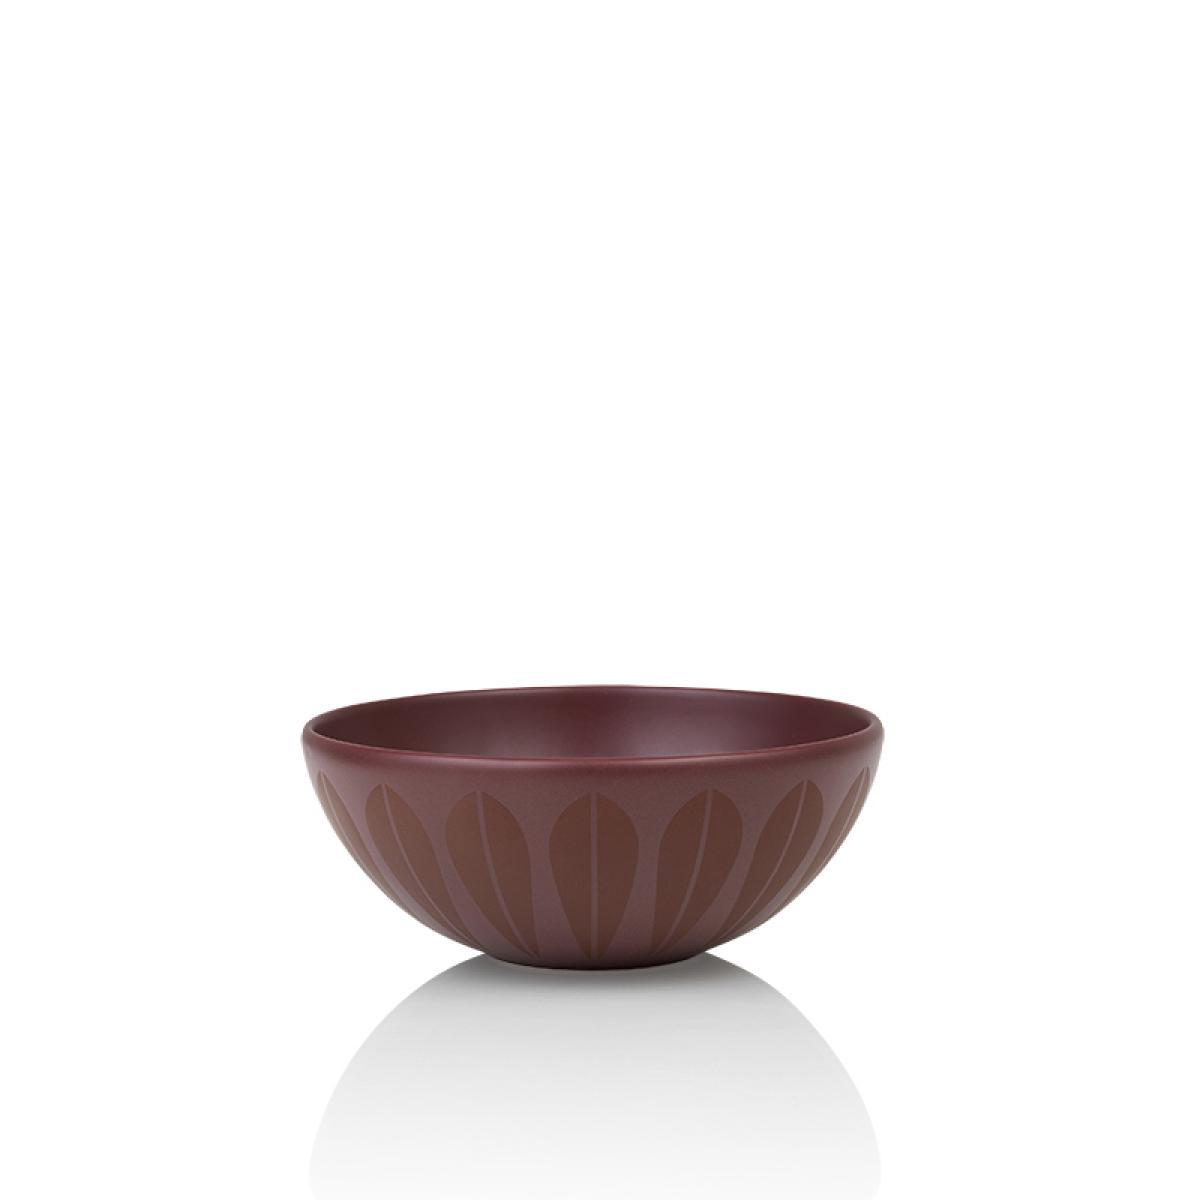 Lucie Kaas Arne Clausen Bowl scuro rosso, 18 cm